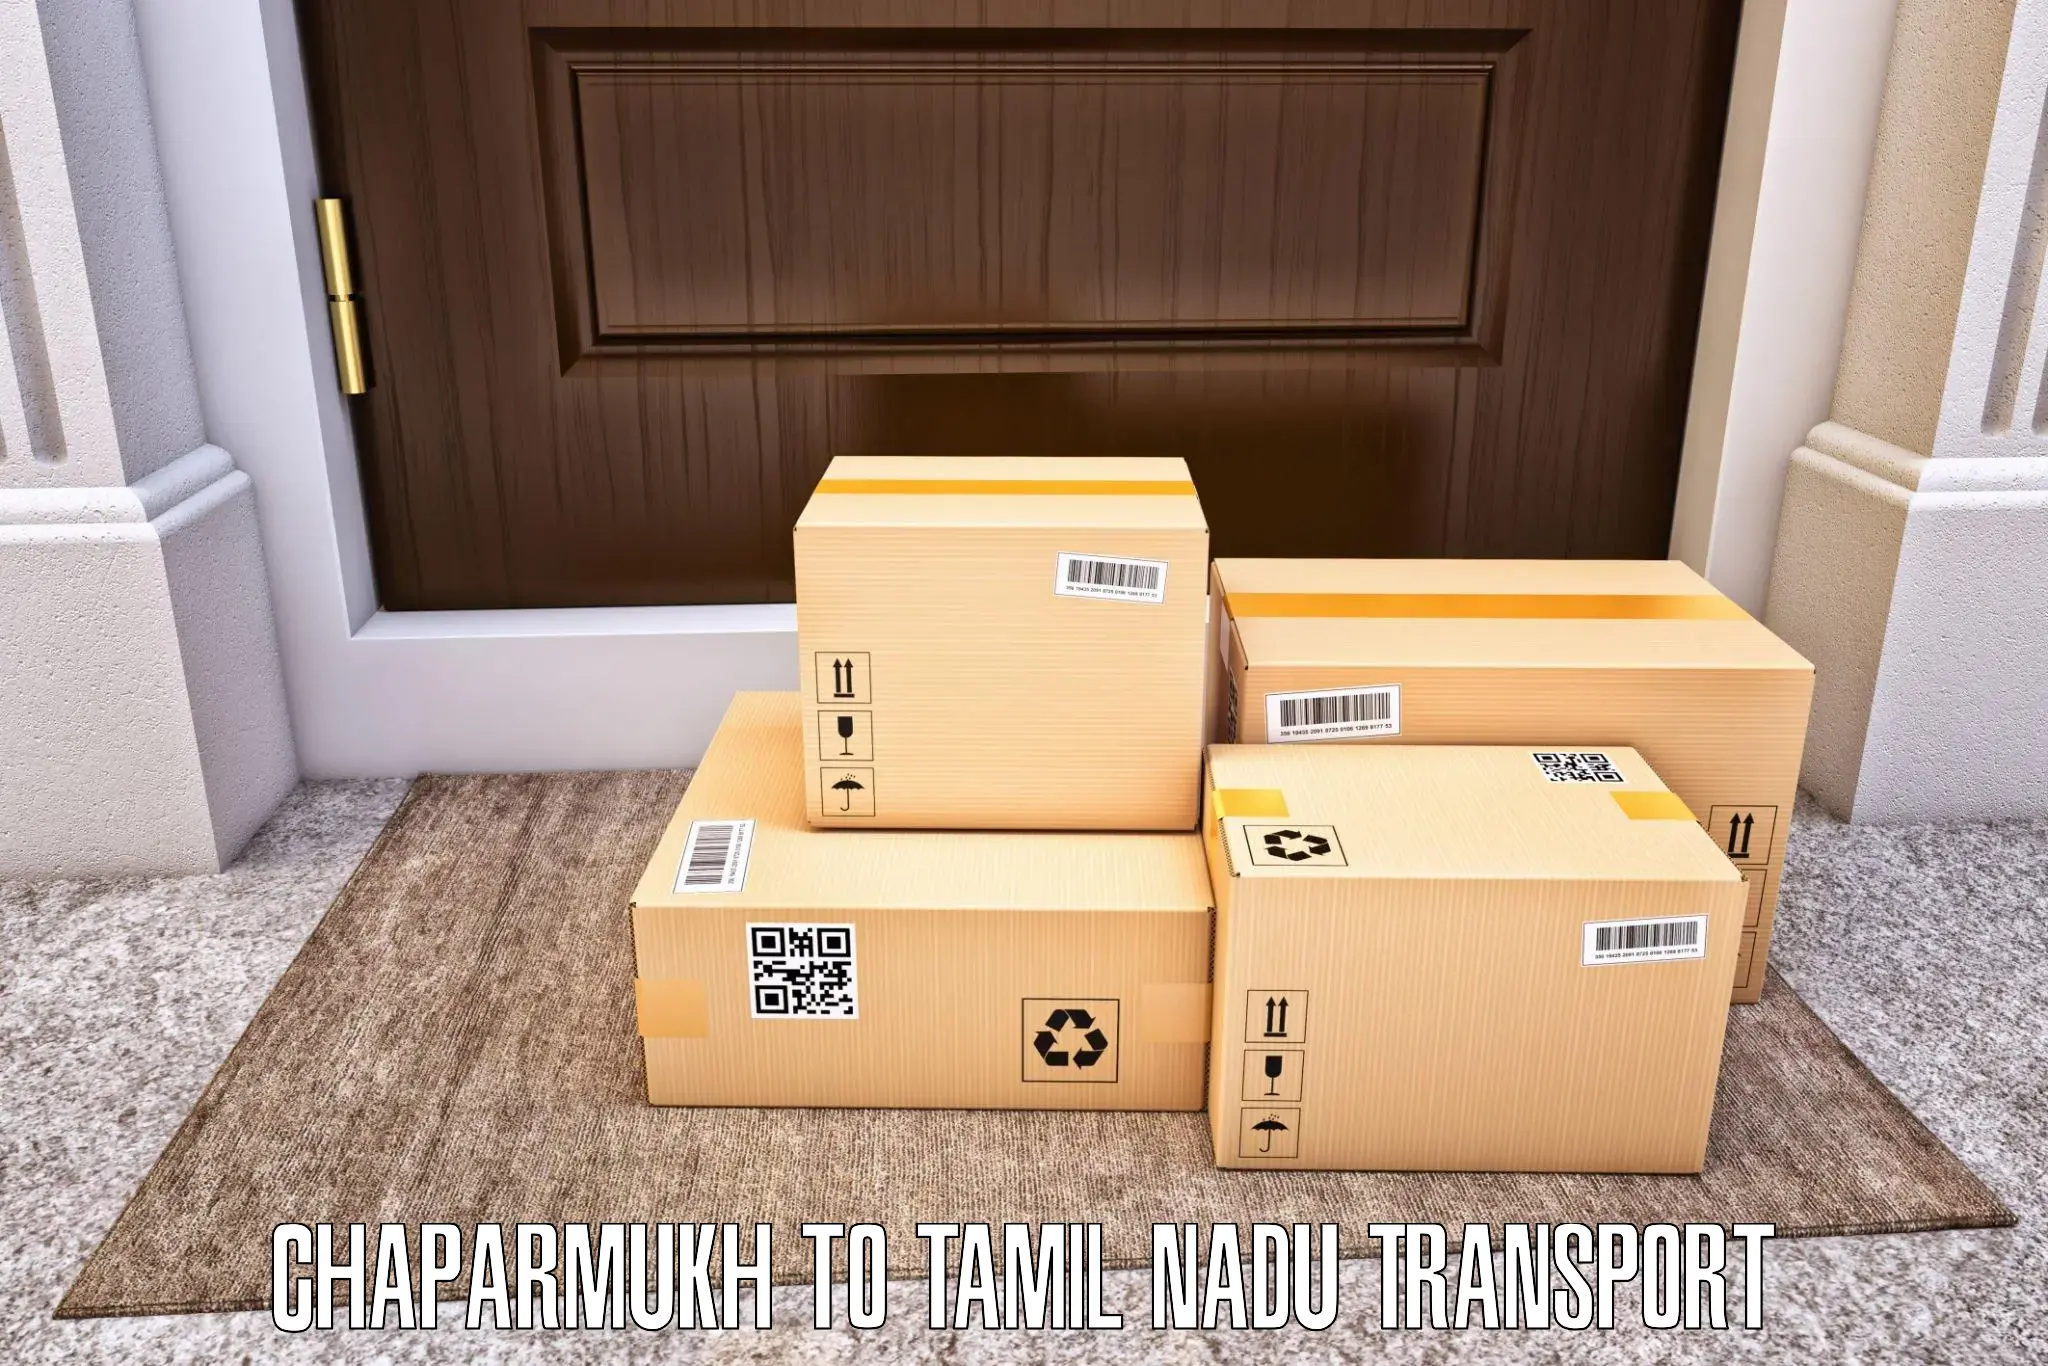 Cargo transport services Chaparmukh to Korattur